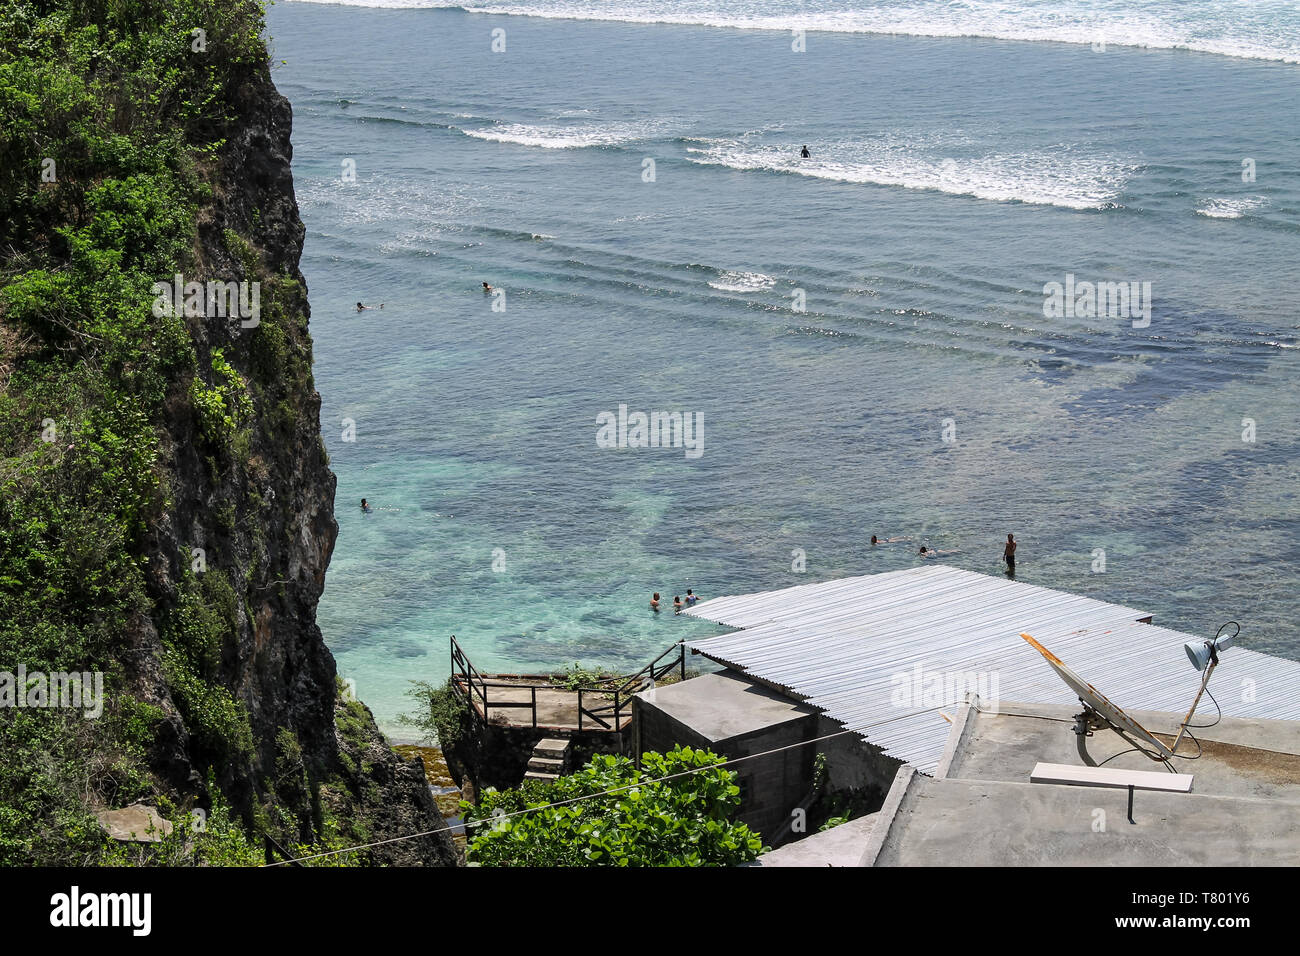 ULUWATU, BALI, INDONESIA - November 30, 2013: Scenic View of the Surf in Uluwatu, Bali from the cliffs. Stock Photo